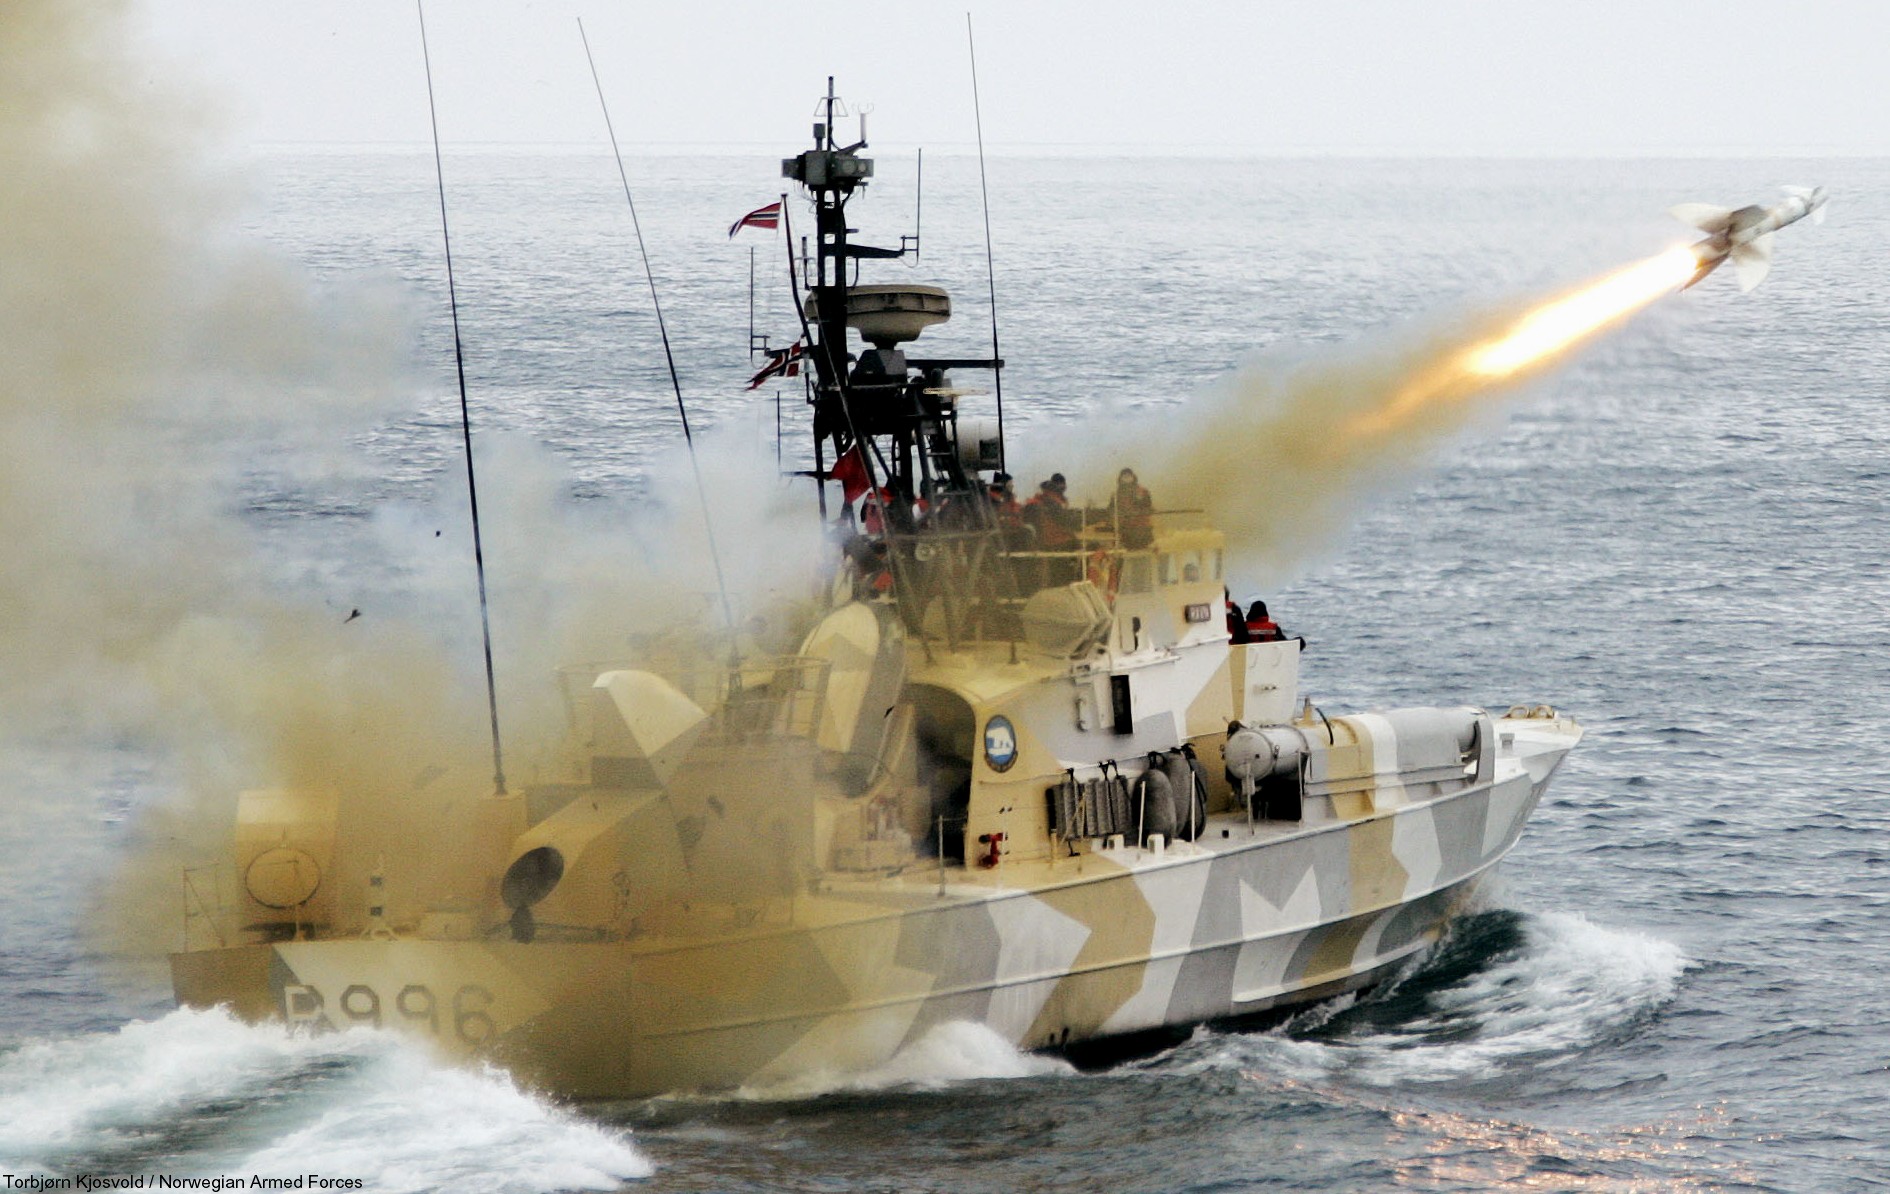 agm-119 penguin anti-ship missile ssm kongsberg defense 22 box launcher norwegian navy fast attack patrol boat